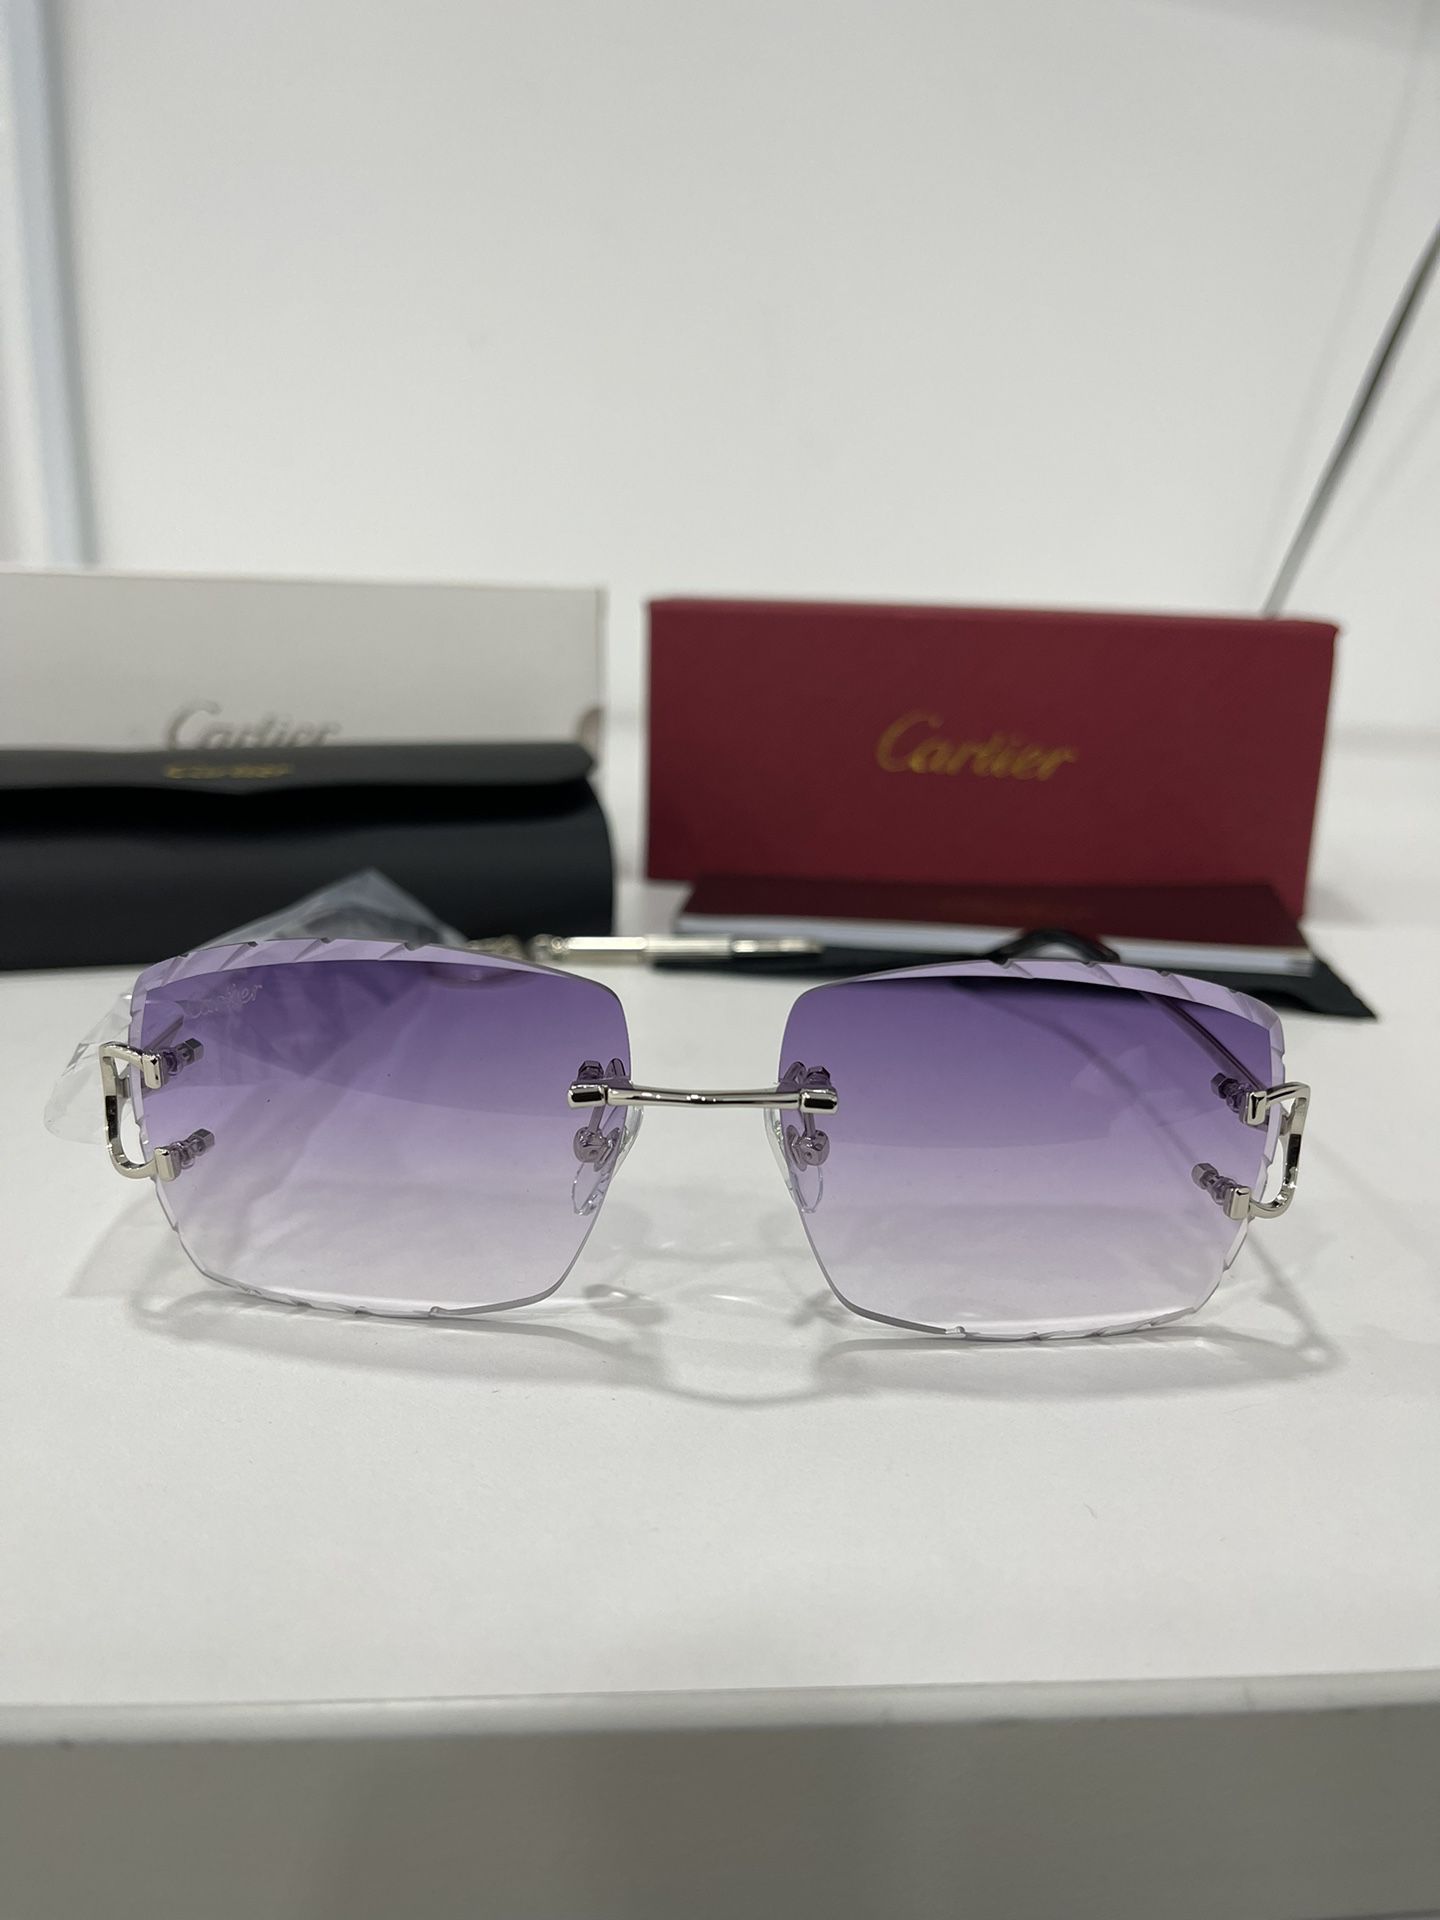 Cartier Glasses(Diamond Cut), Purple, Silver Frame